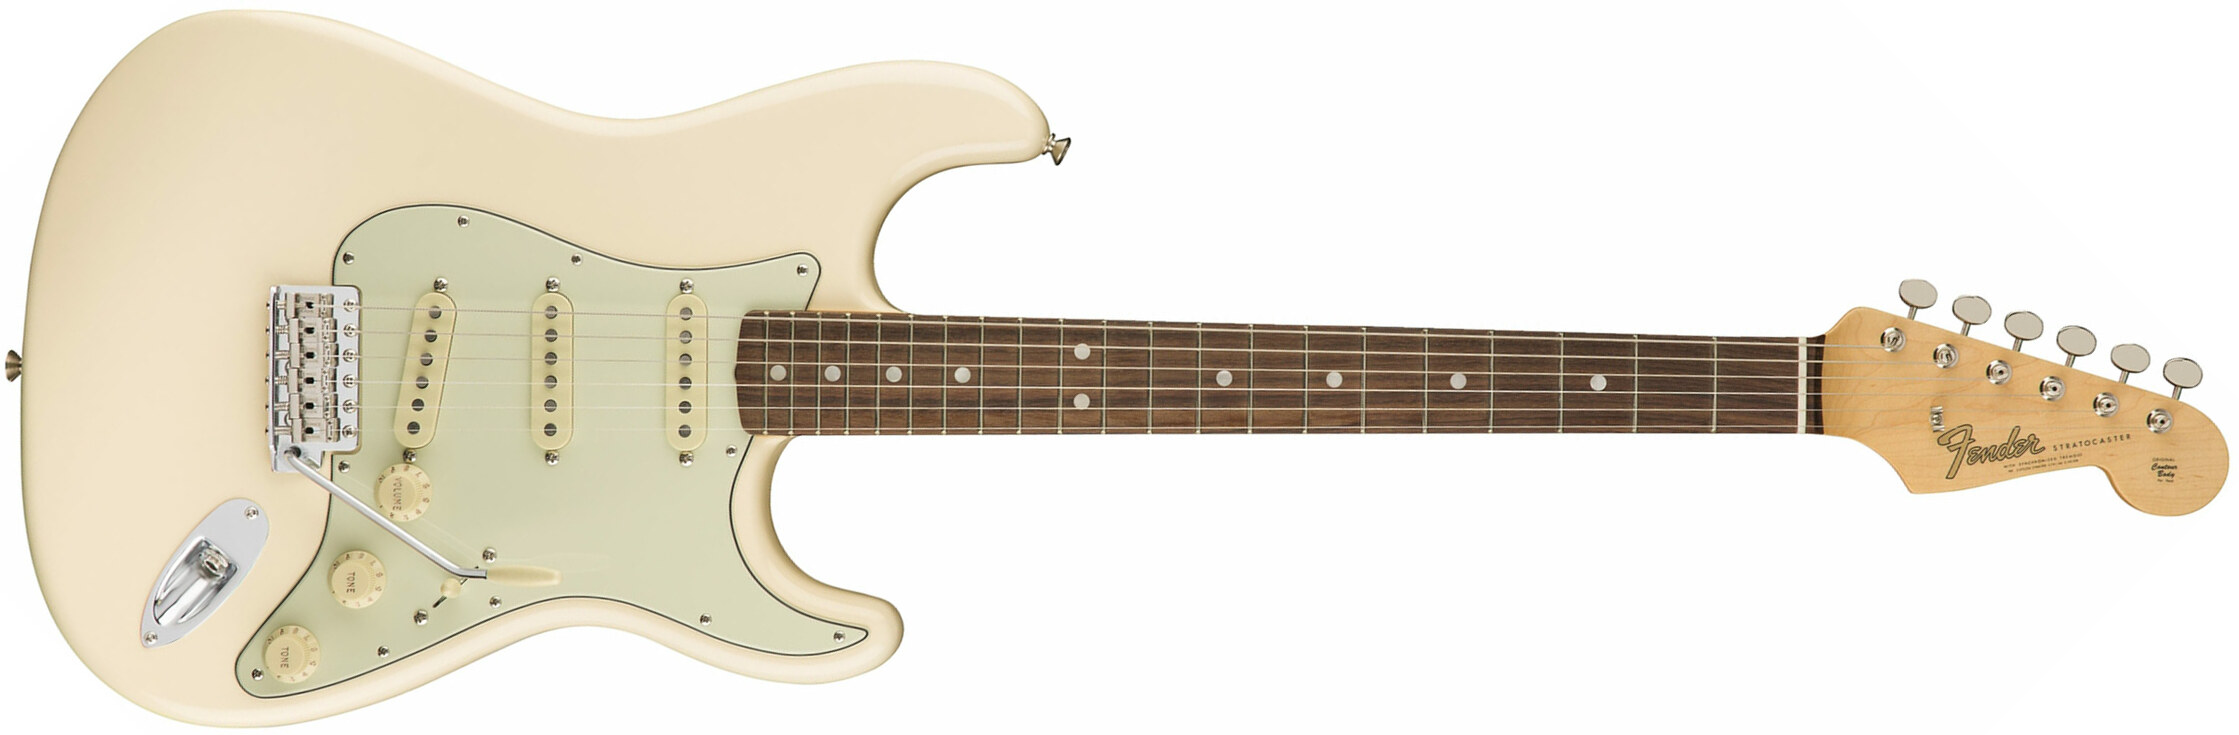 Fender Strat '60s American Original Usa Sss Rw - Olympic White - Guitarra eléctrica con forma de str. - Main picture